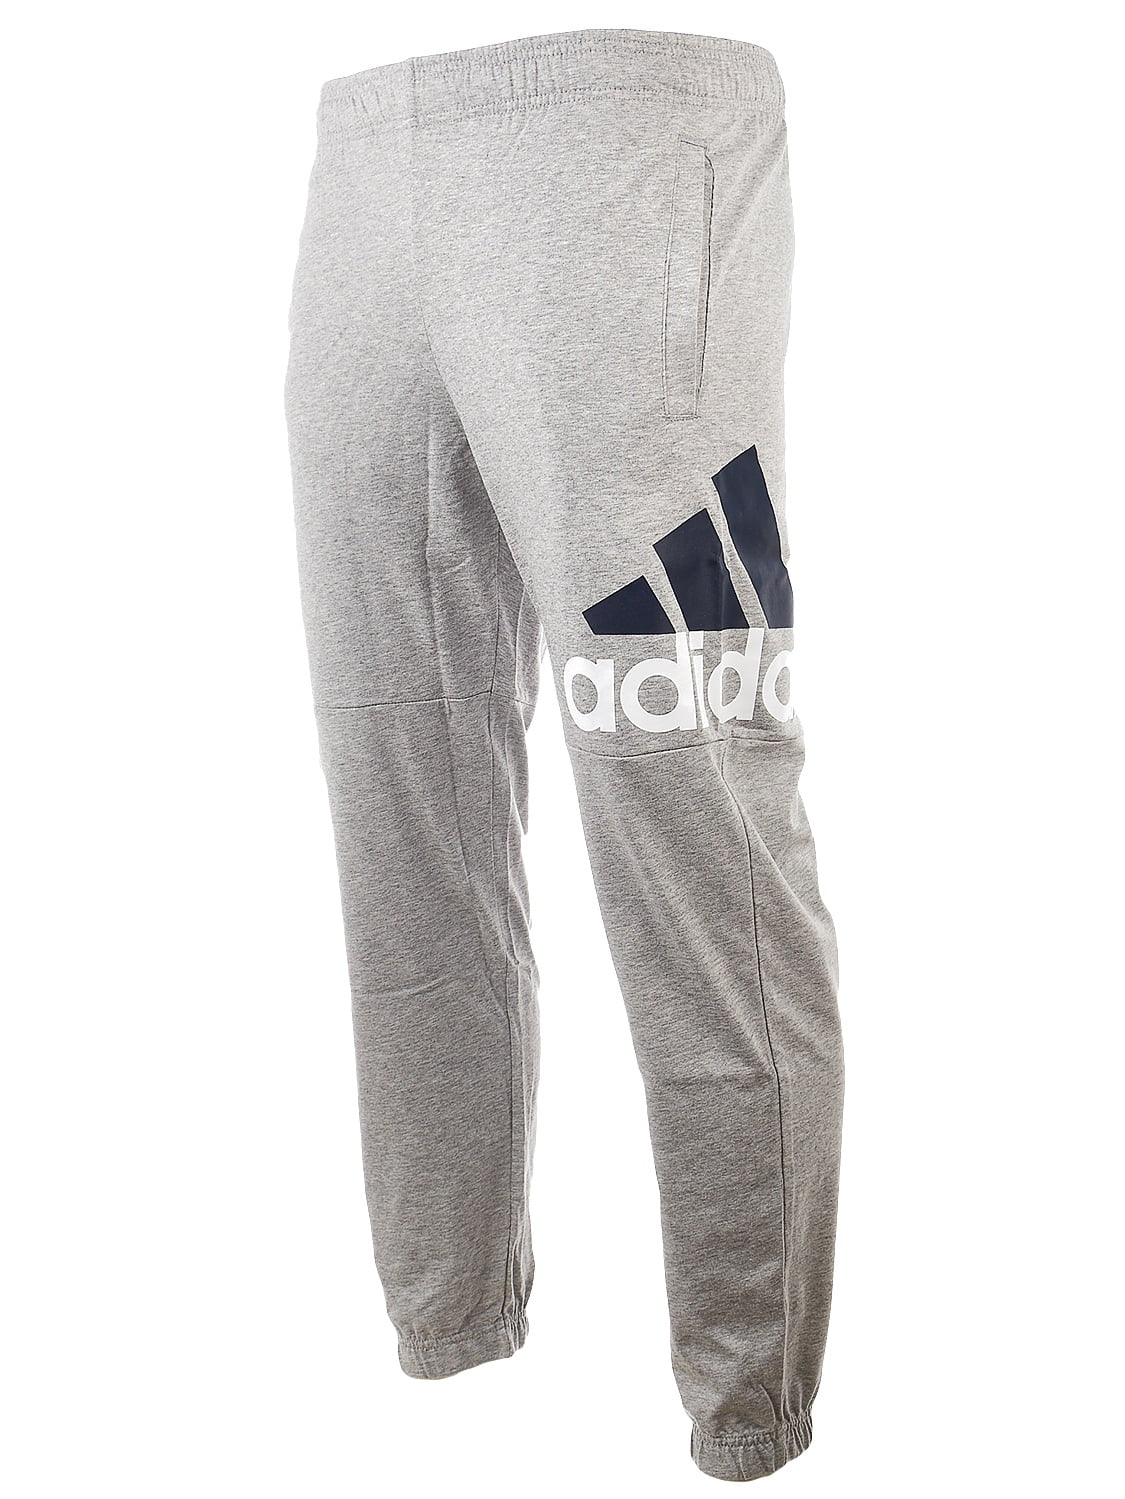 Adidas Essentials Performance Logo Pants - Medium Grey Heather/White/Black  - Mens - XL